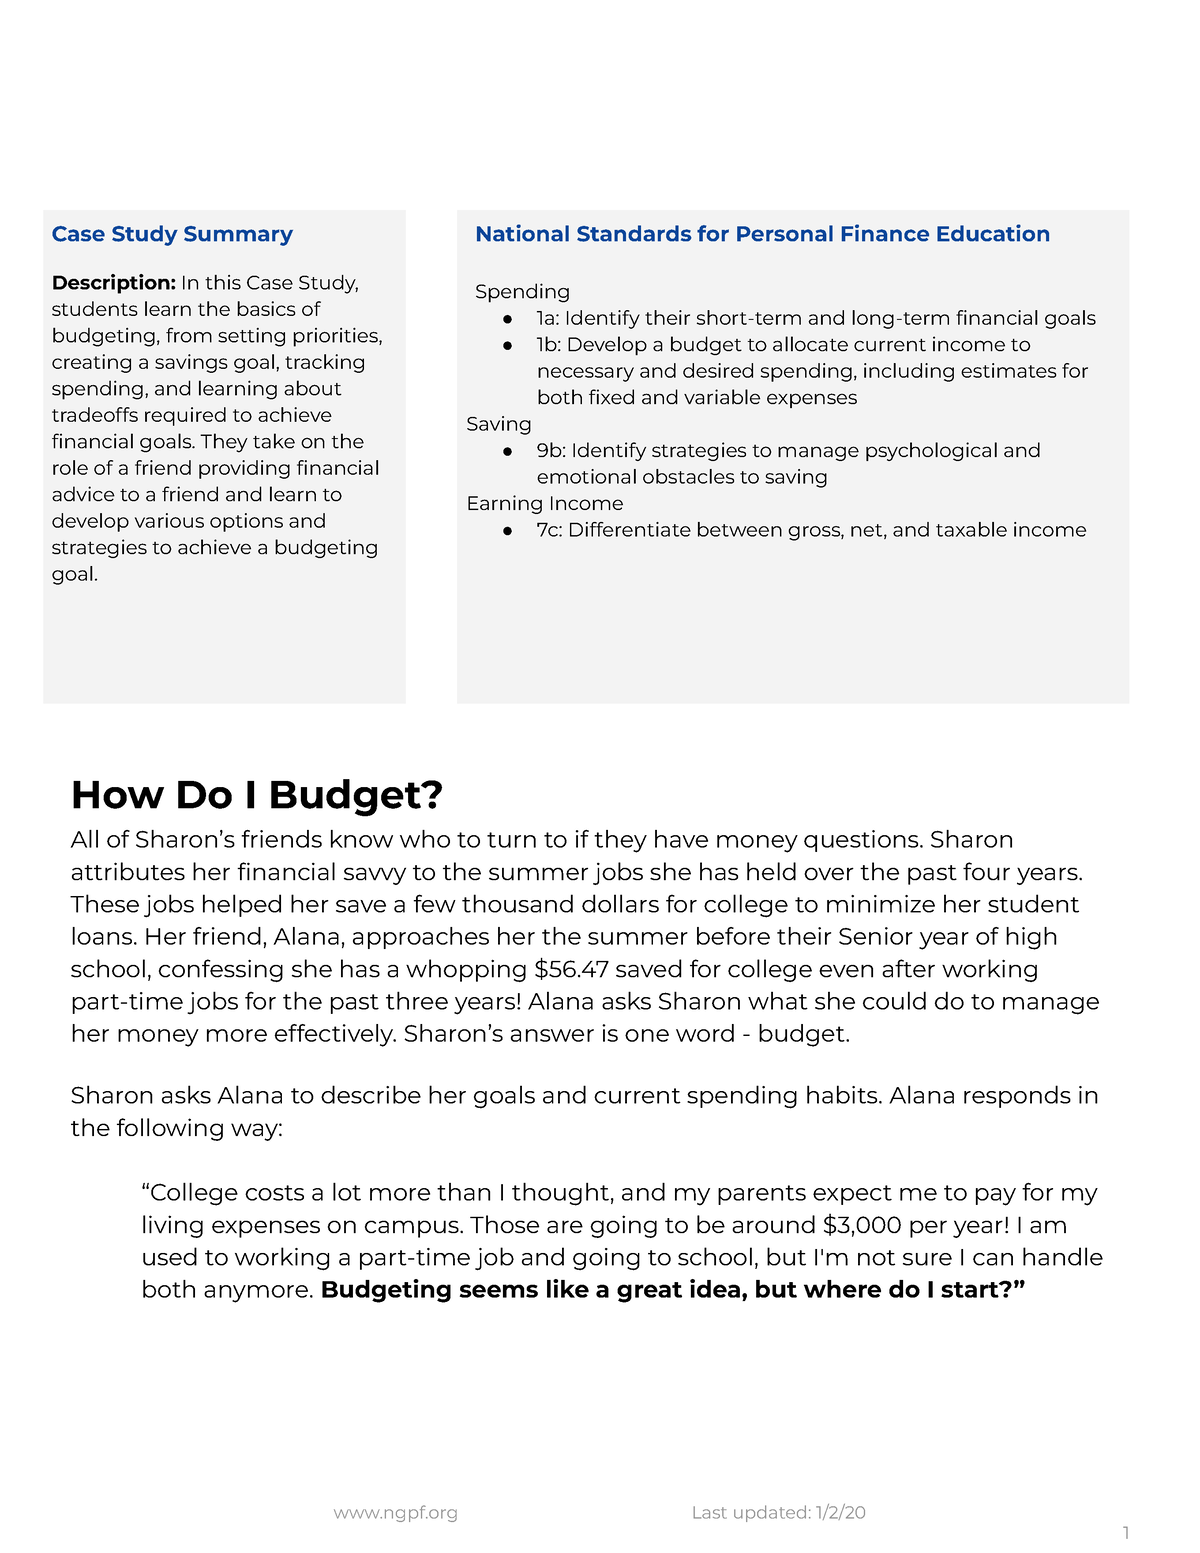 budgeting case study answers